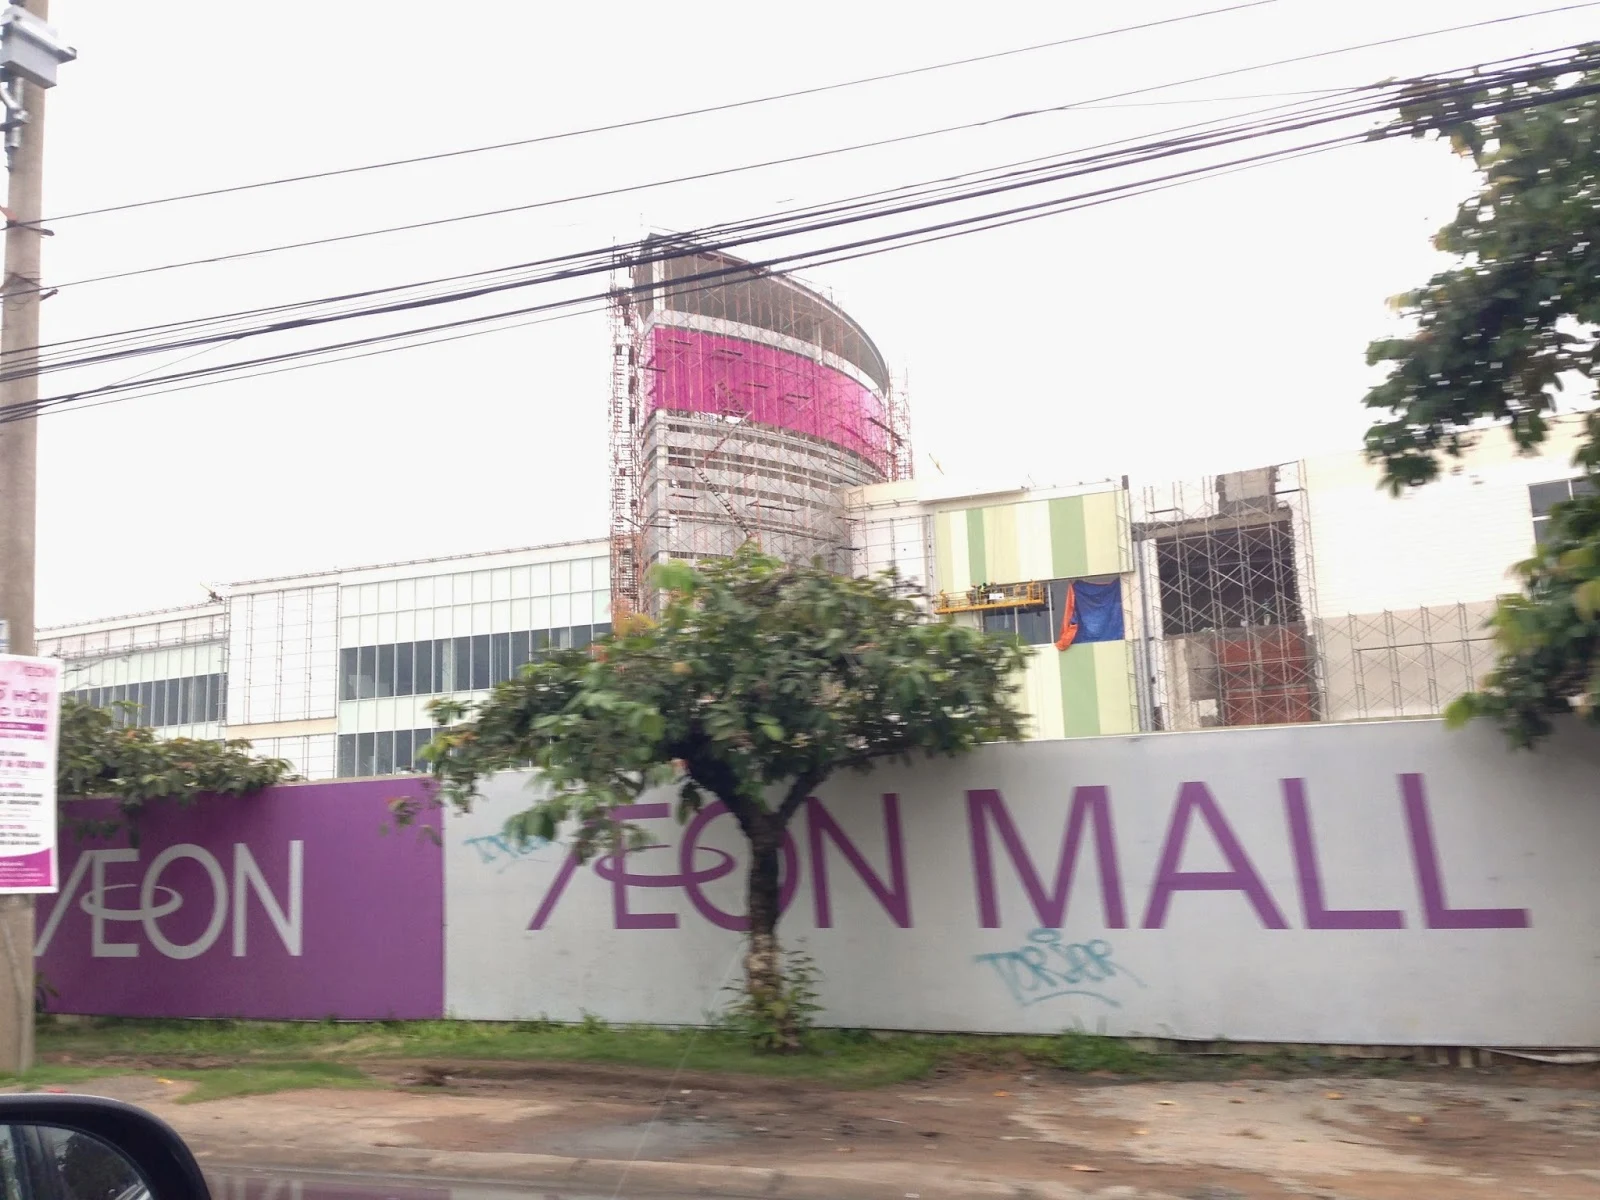 New-aeon-mall-nearHCMC